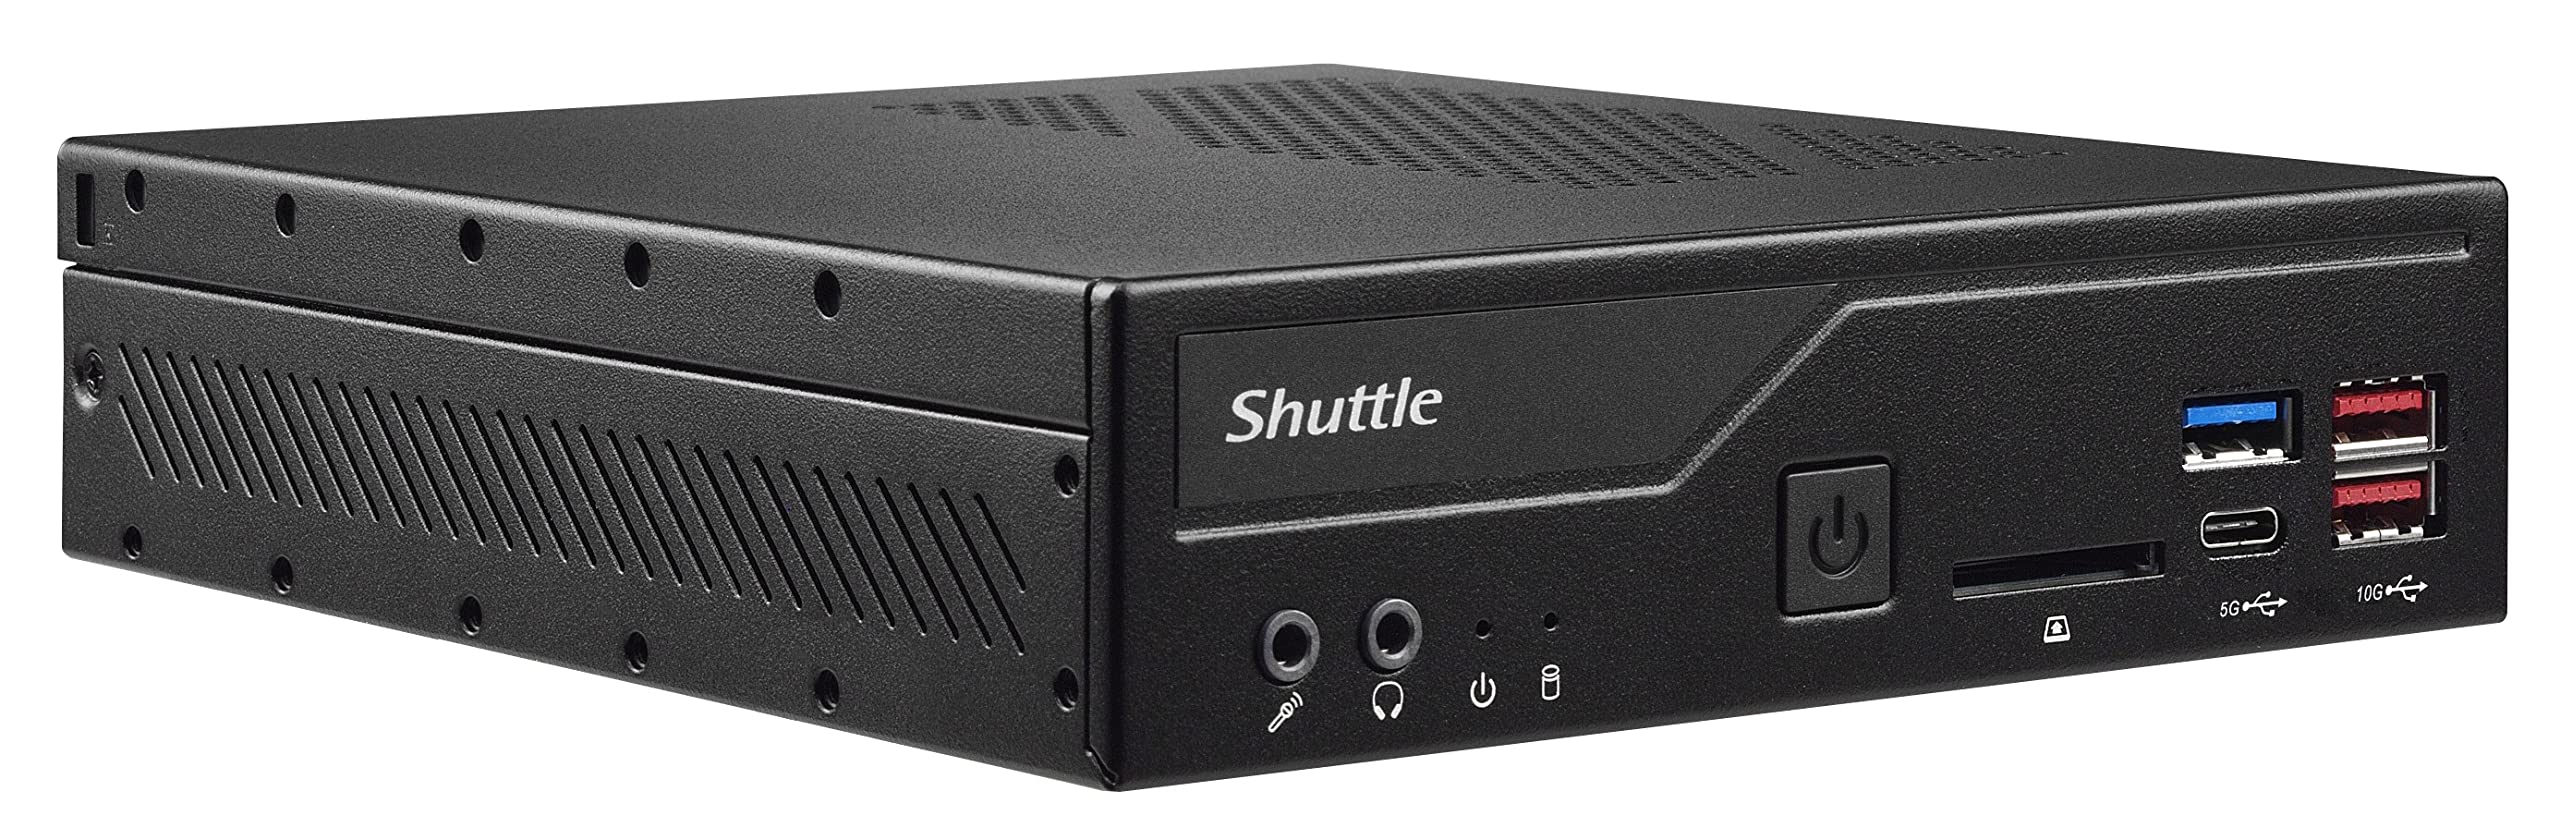 Shuttle XPC Slim DH670 Mini Barebone PC Intel H610 Support 65W Cometlake CPU No Ram No HDD/SSD No CPU No OS - Click Image to Close